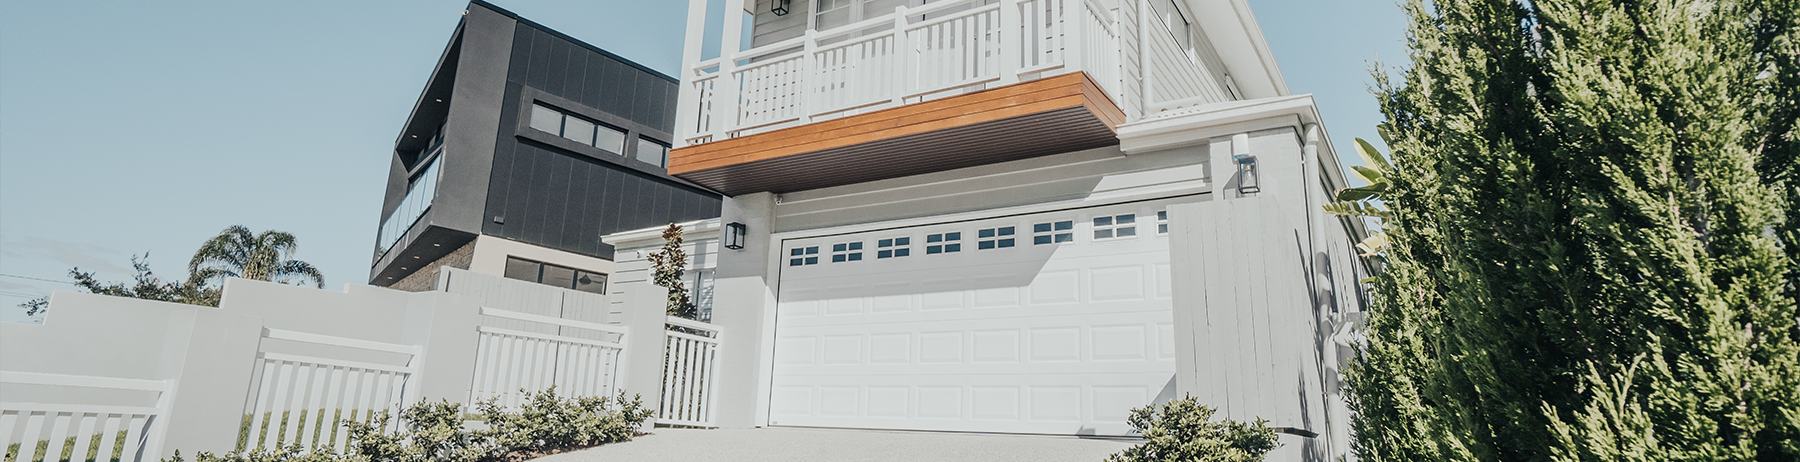 Heritage sectional garage door in Colorbond® Surfmist® with Stockton windows.